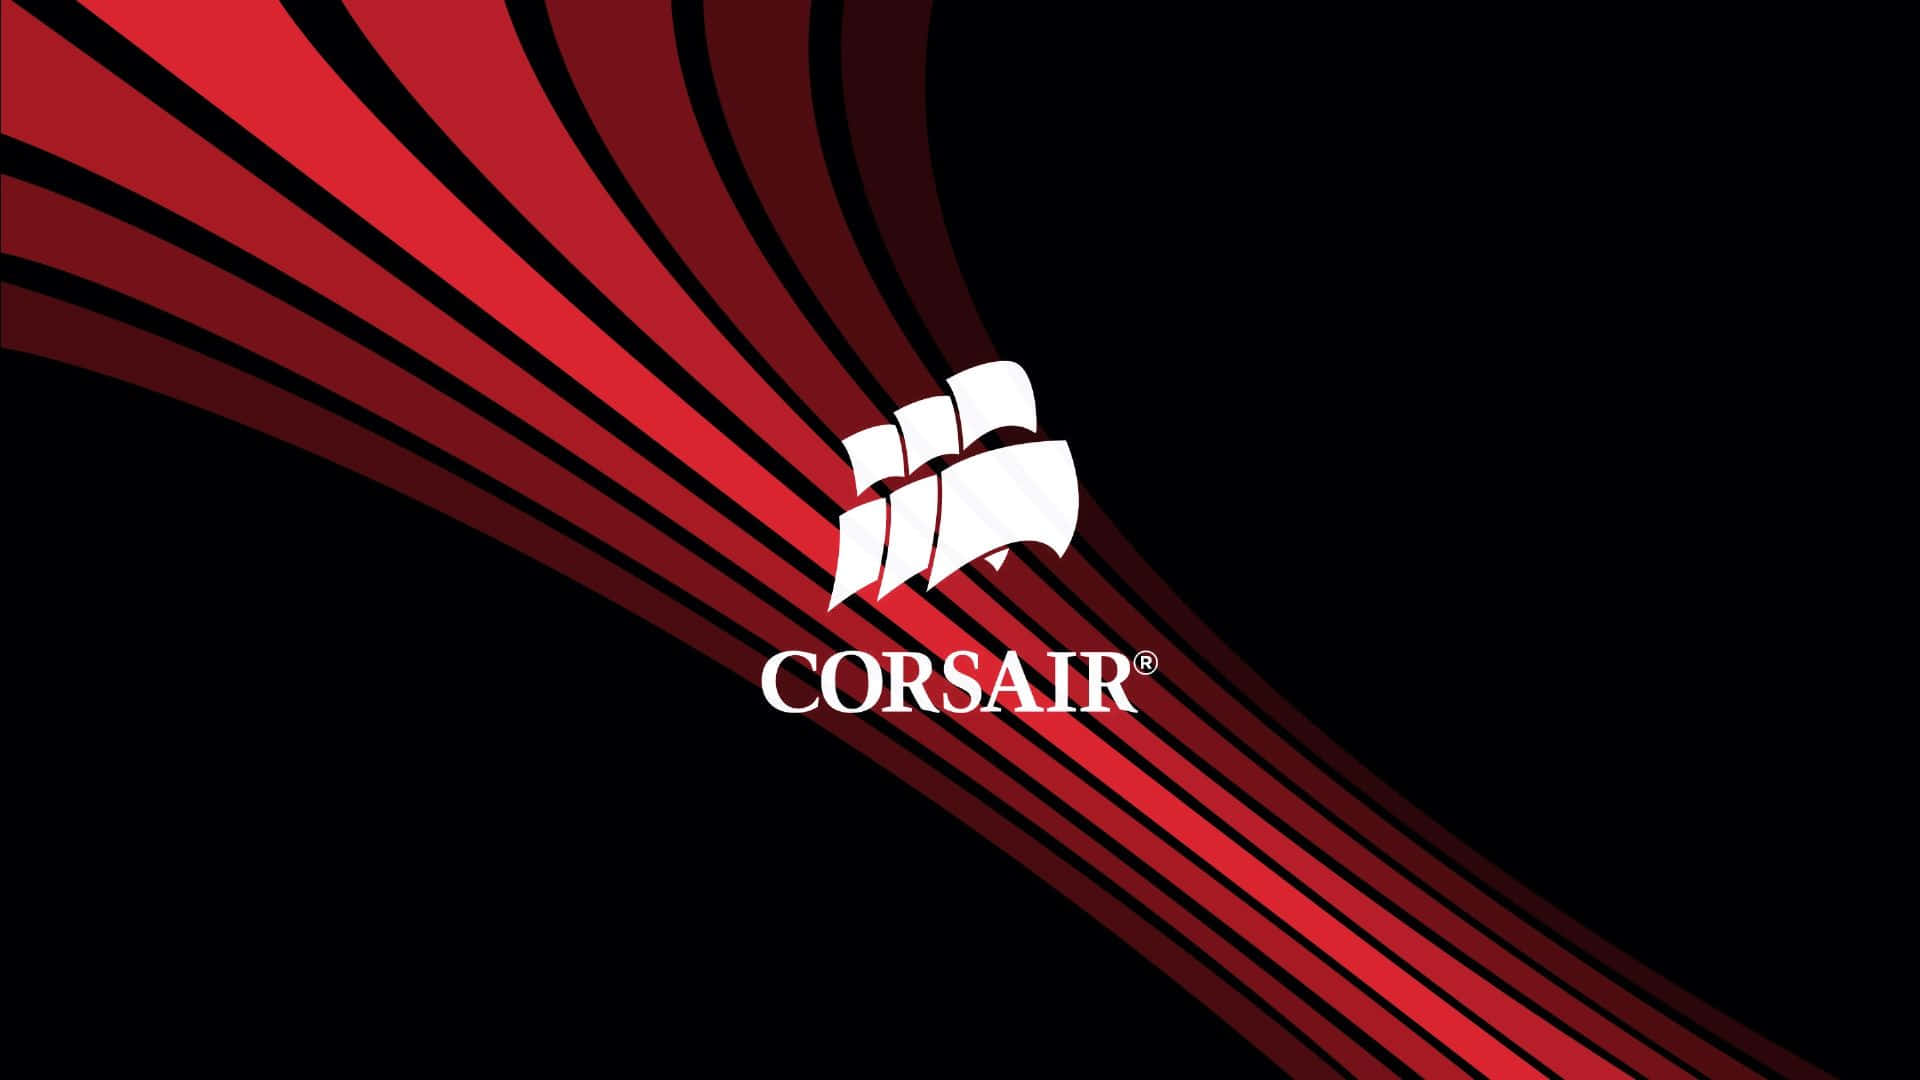 Corsair - Setting the Standard for High Performance Computing